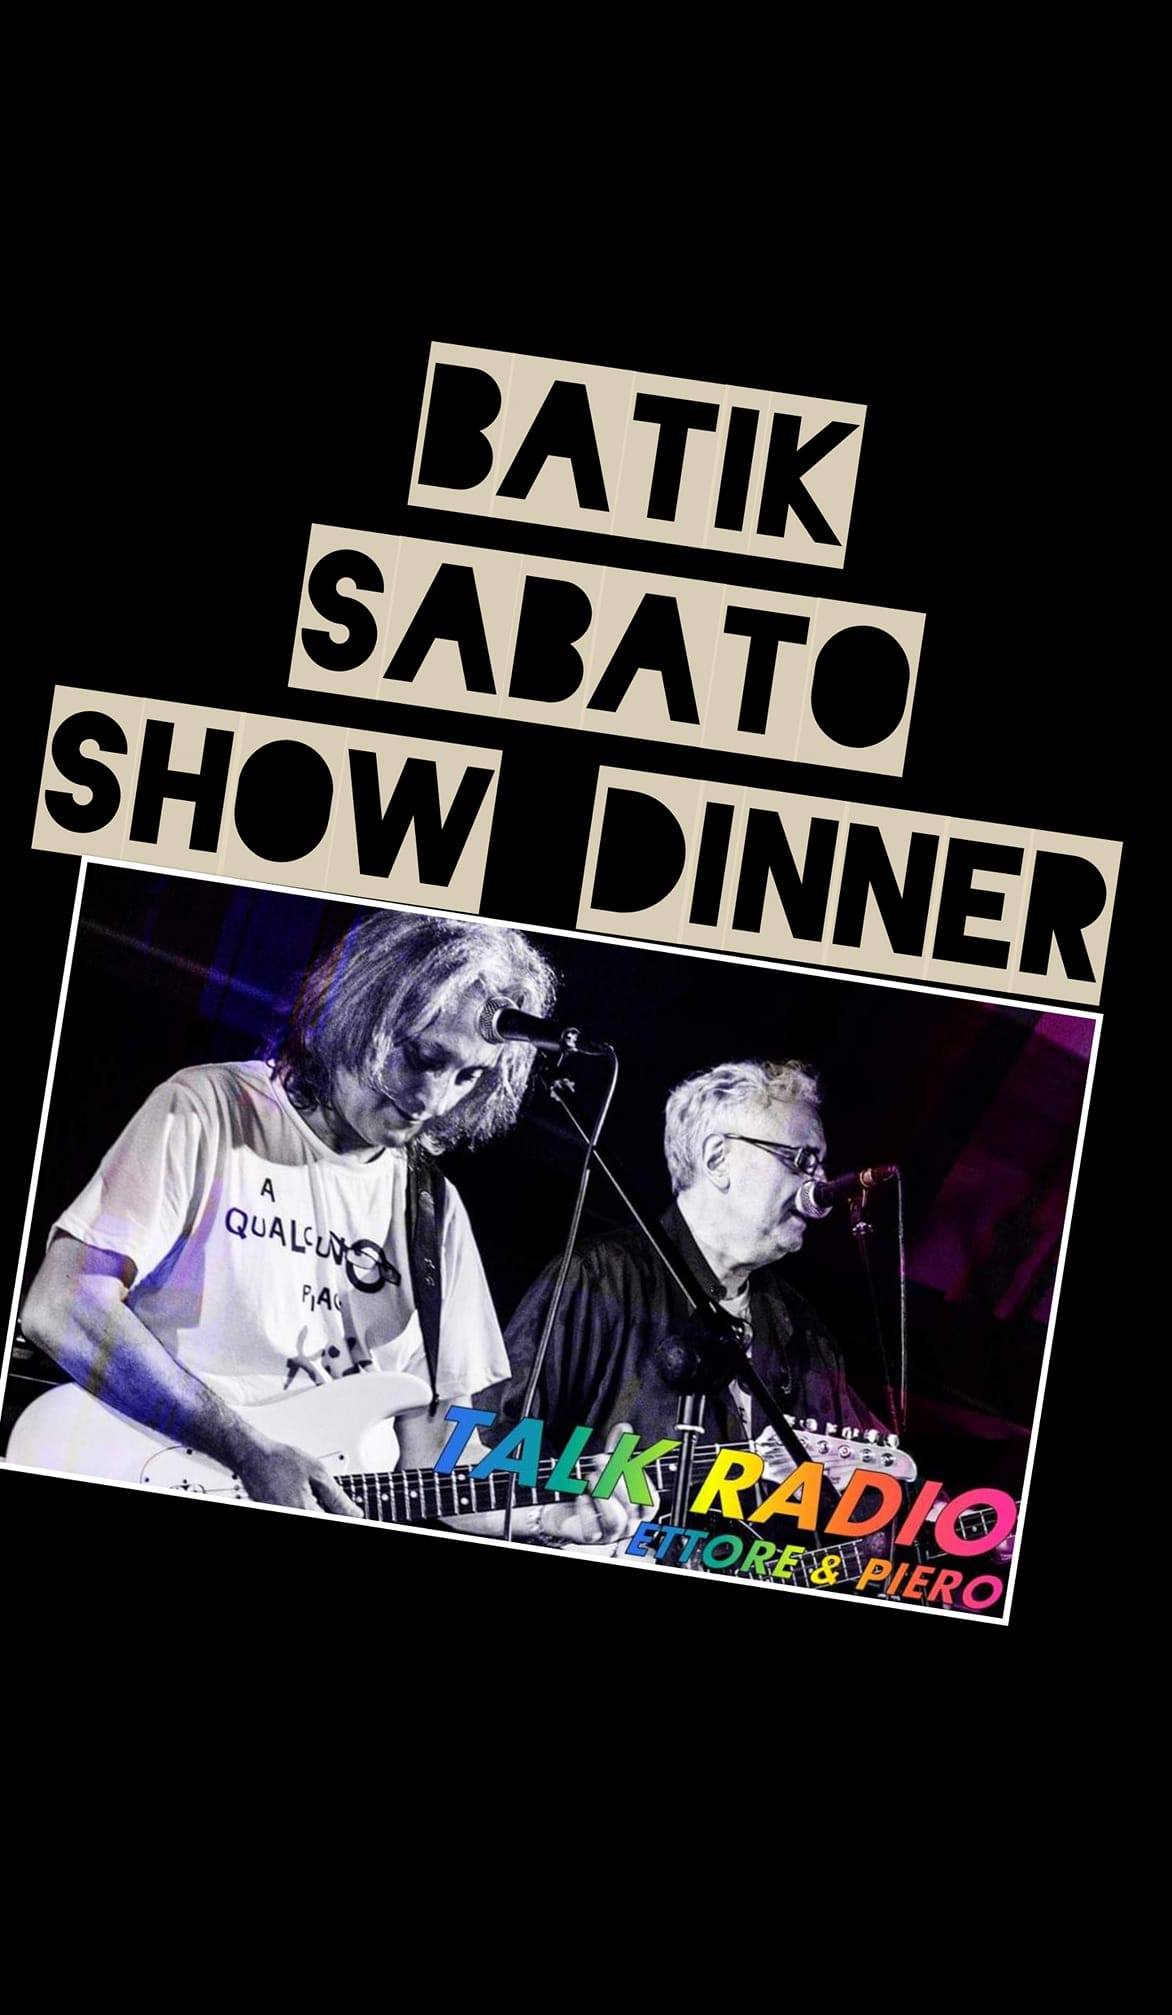 Talk Radio Batik Civitanova Marche